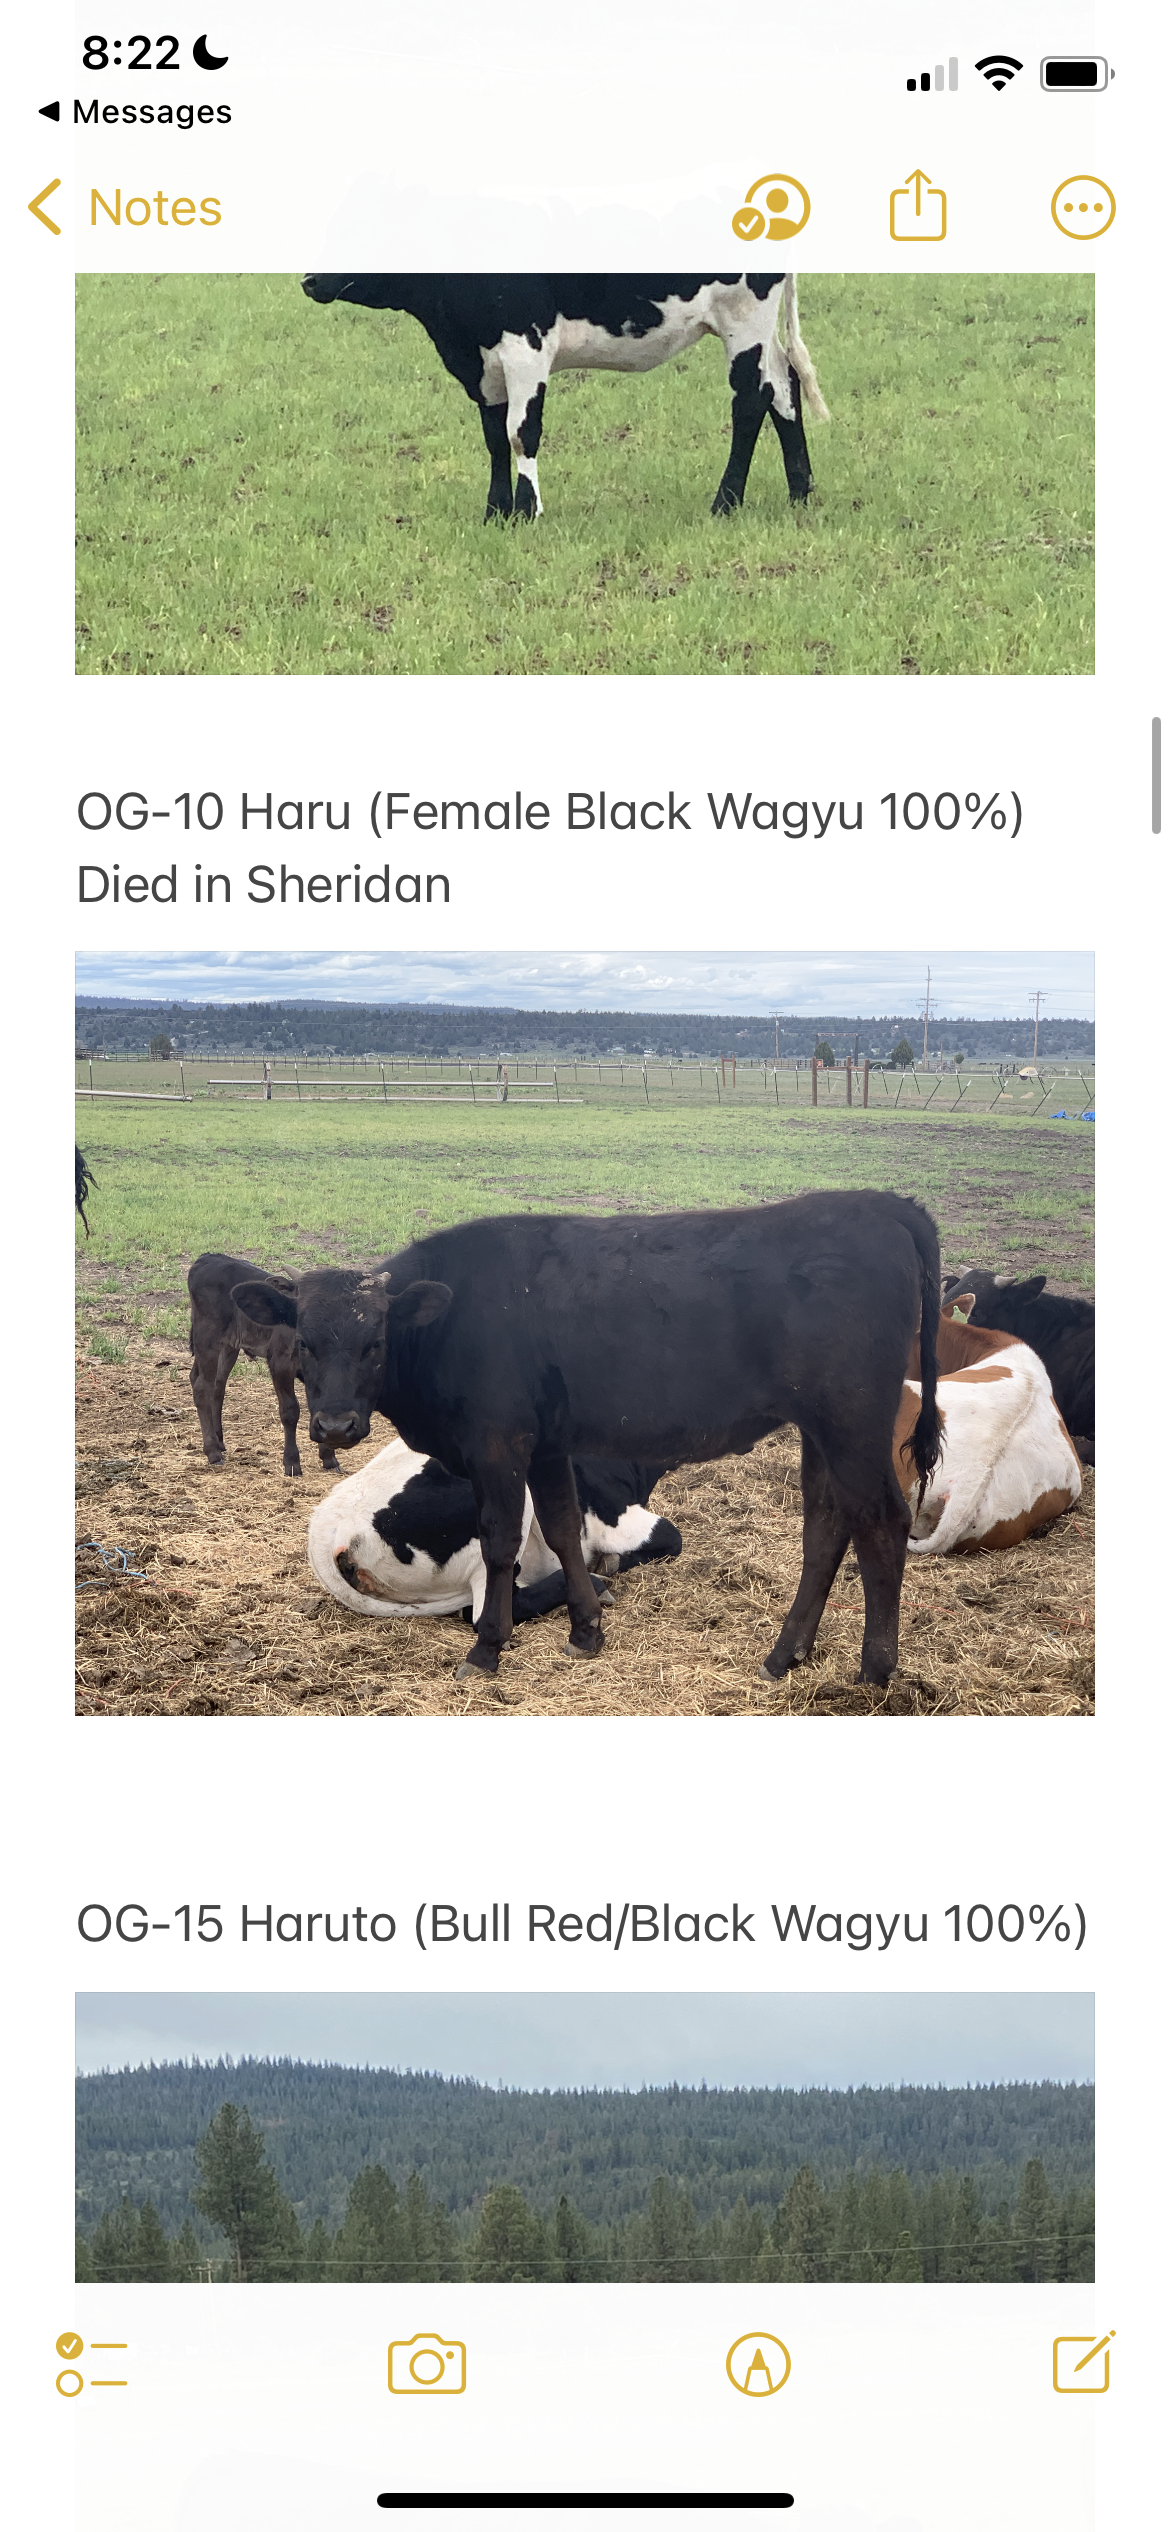 Wagyu cows